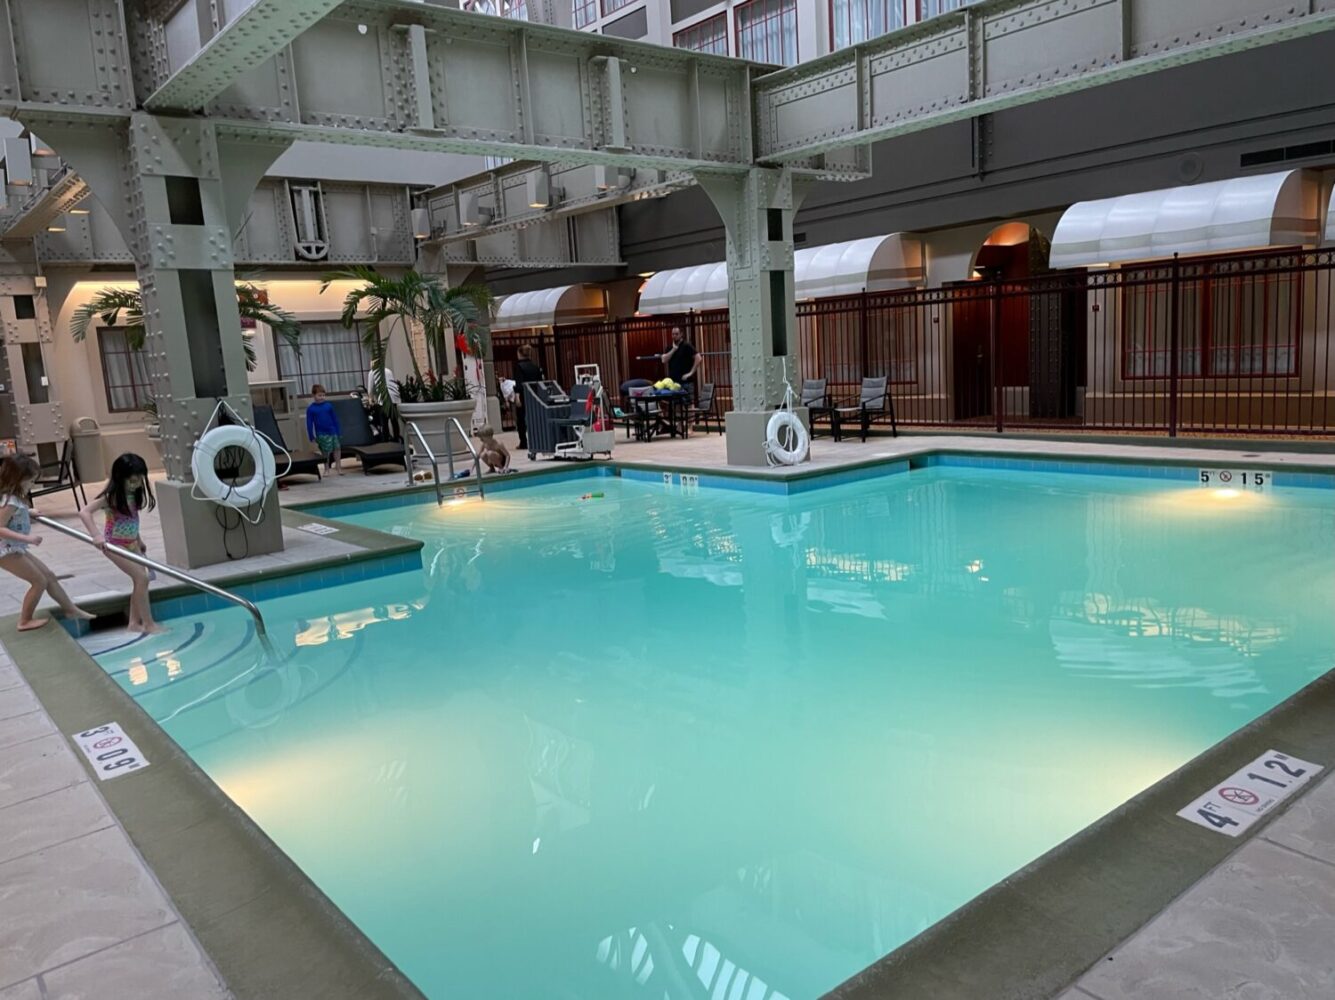 Crowne Plaza Hotel Pool Indianapolis